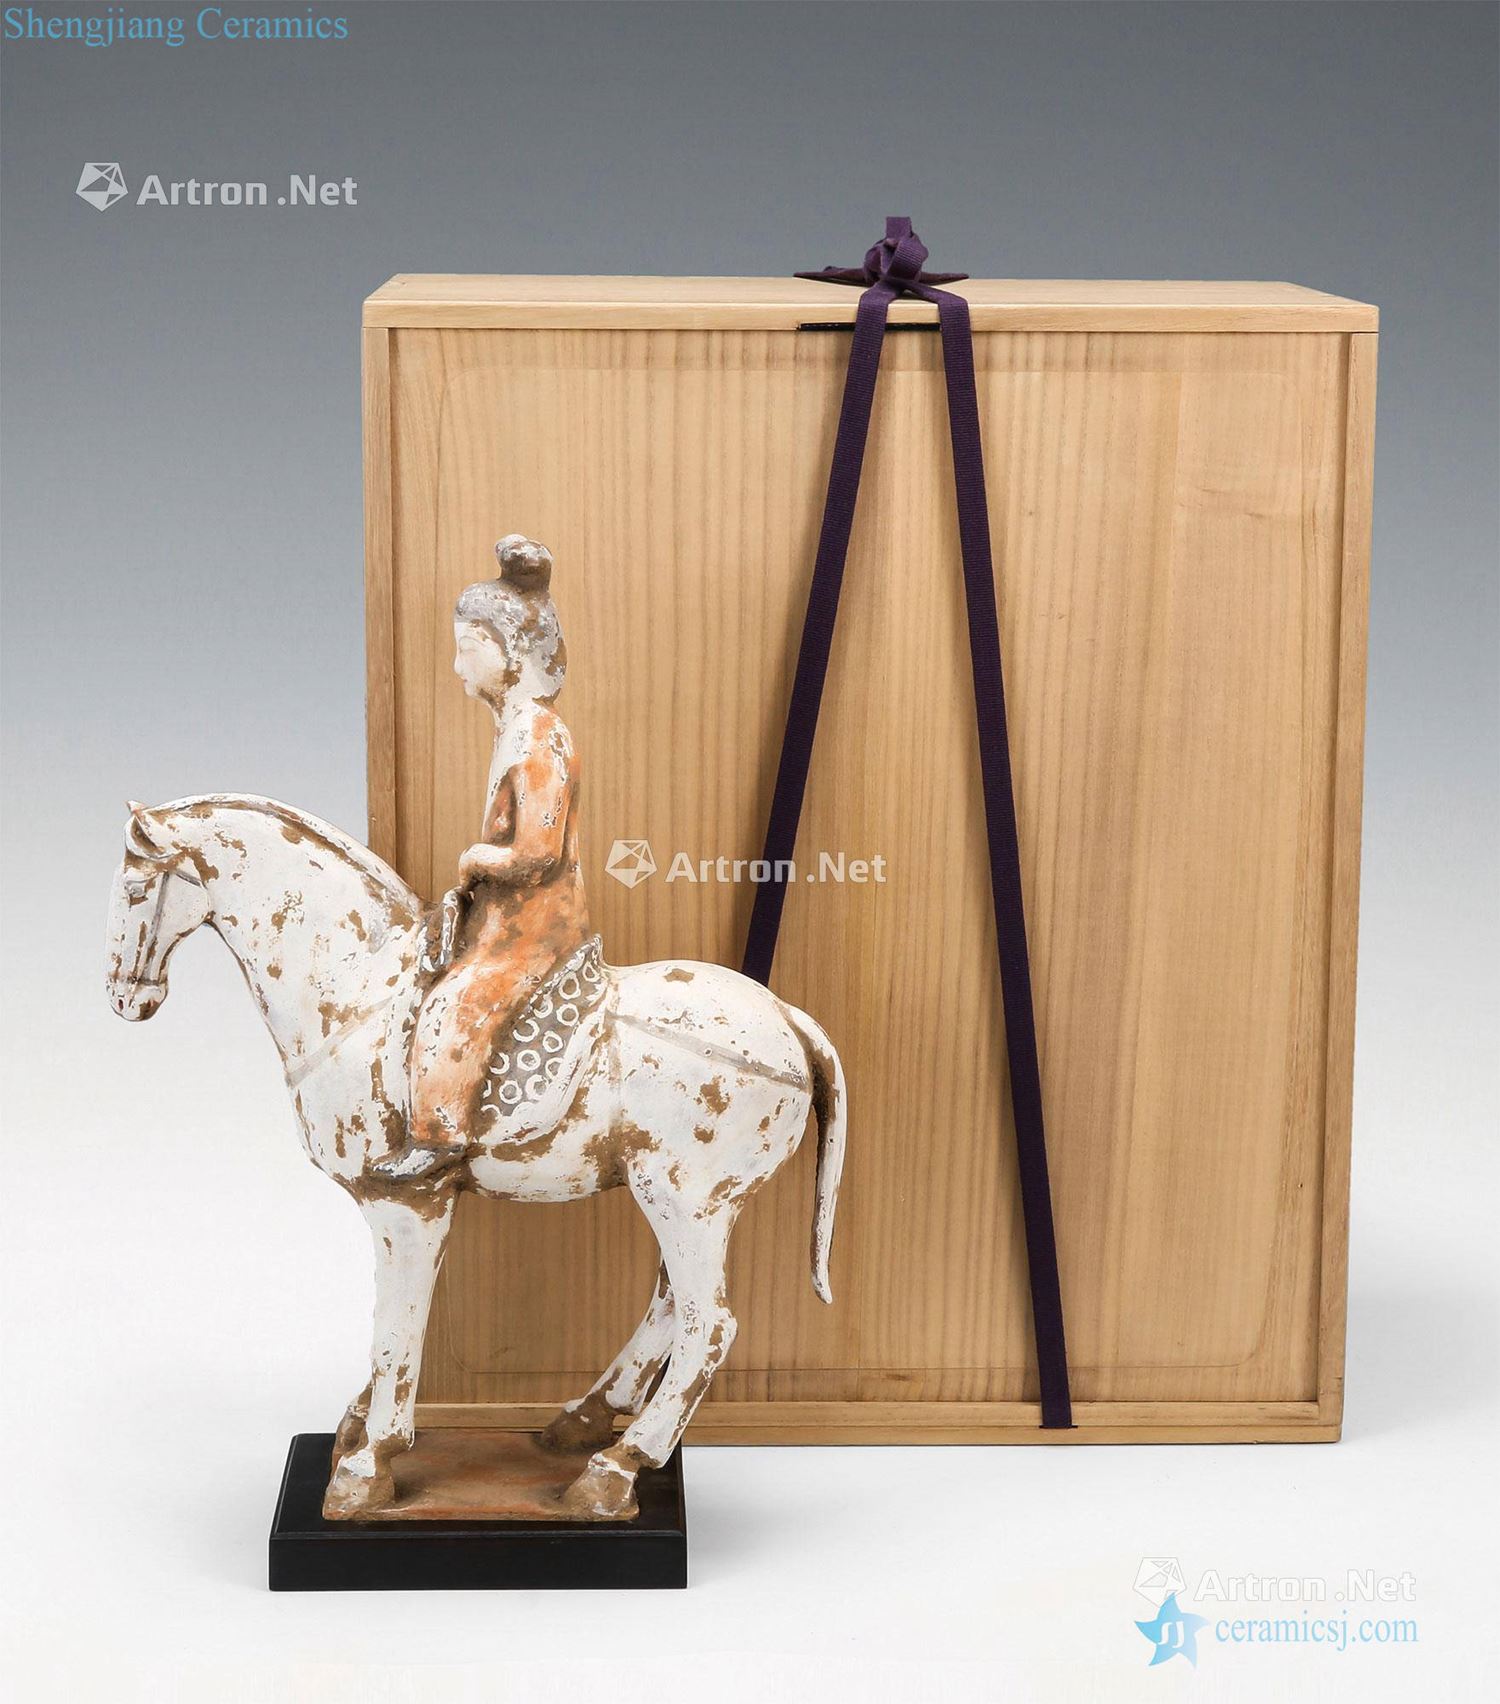 Tang add figurines on horseback